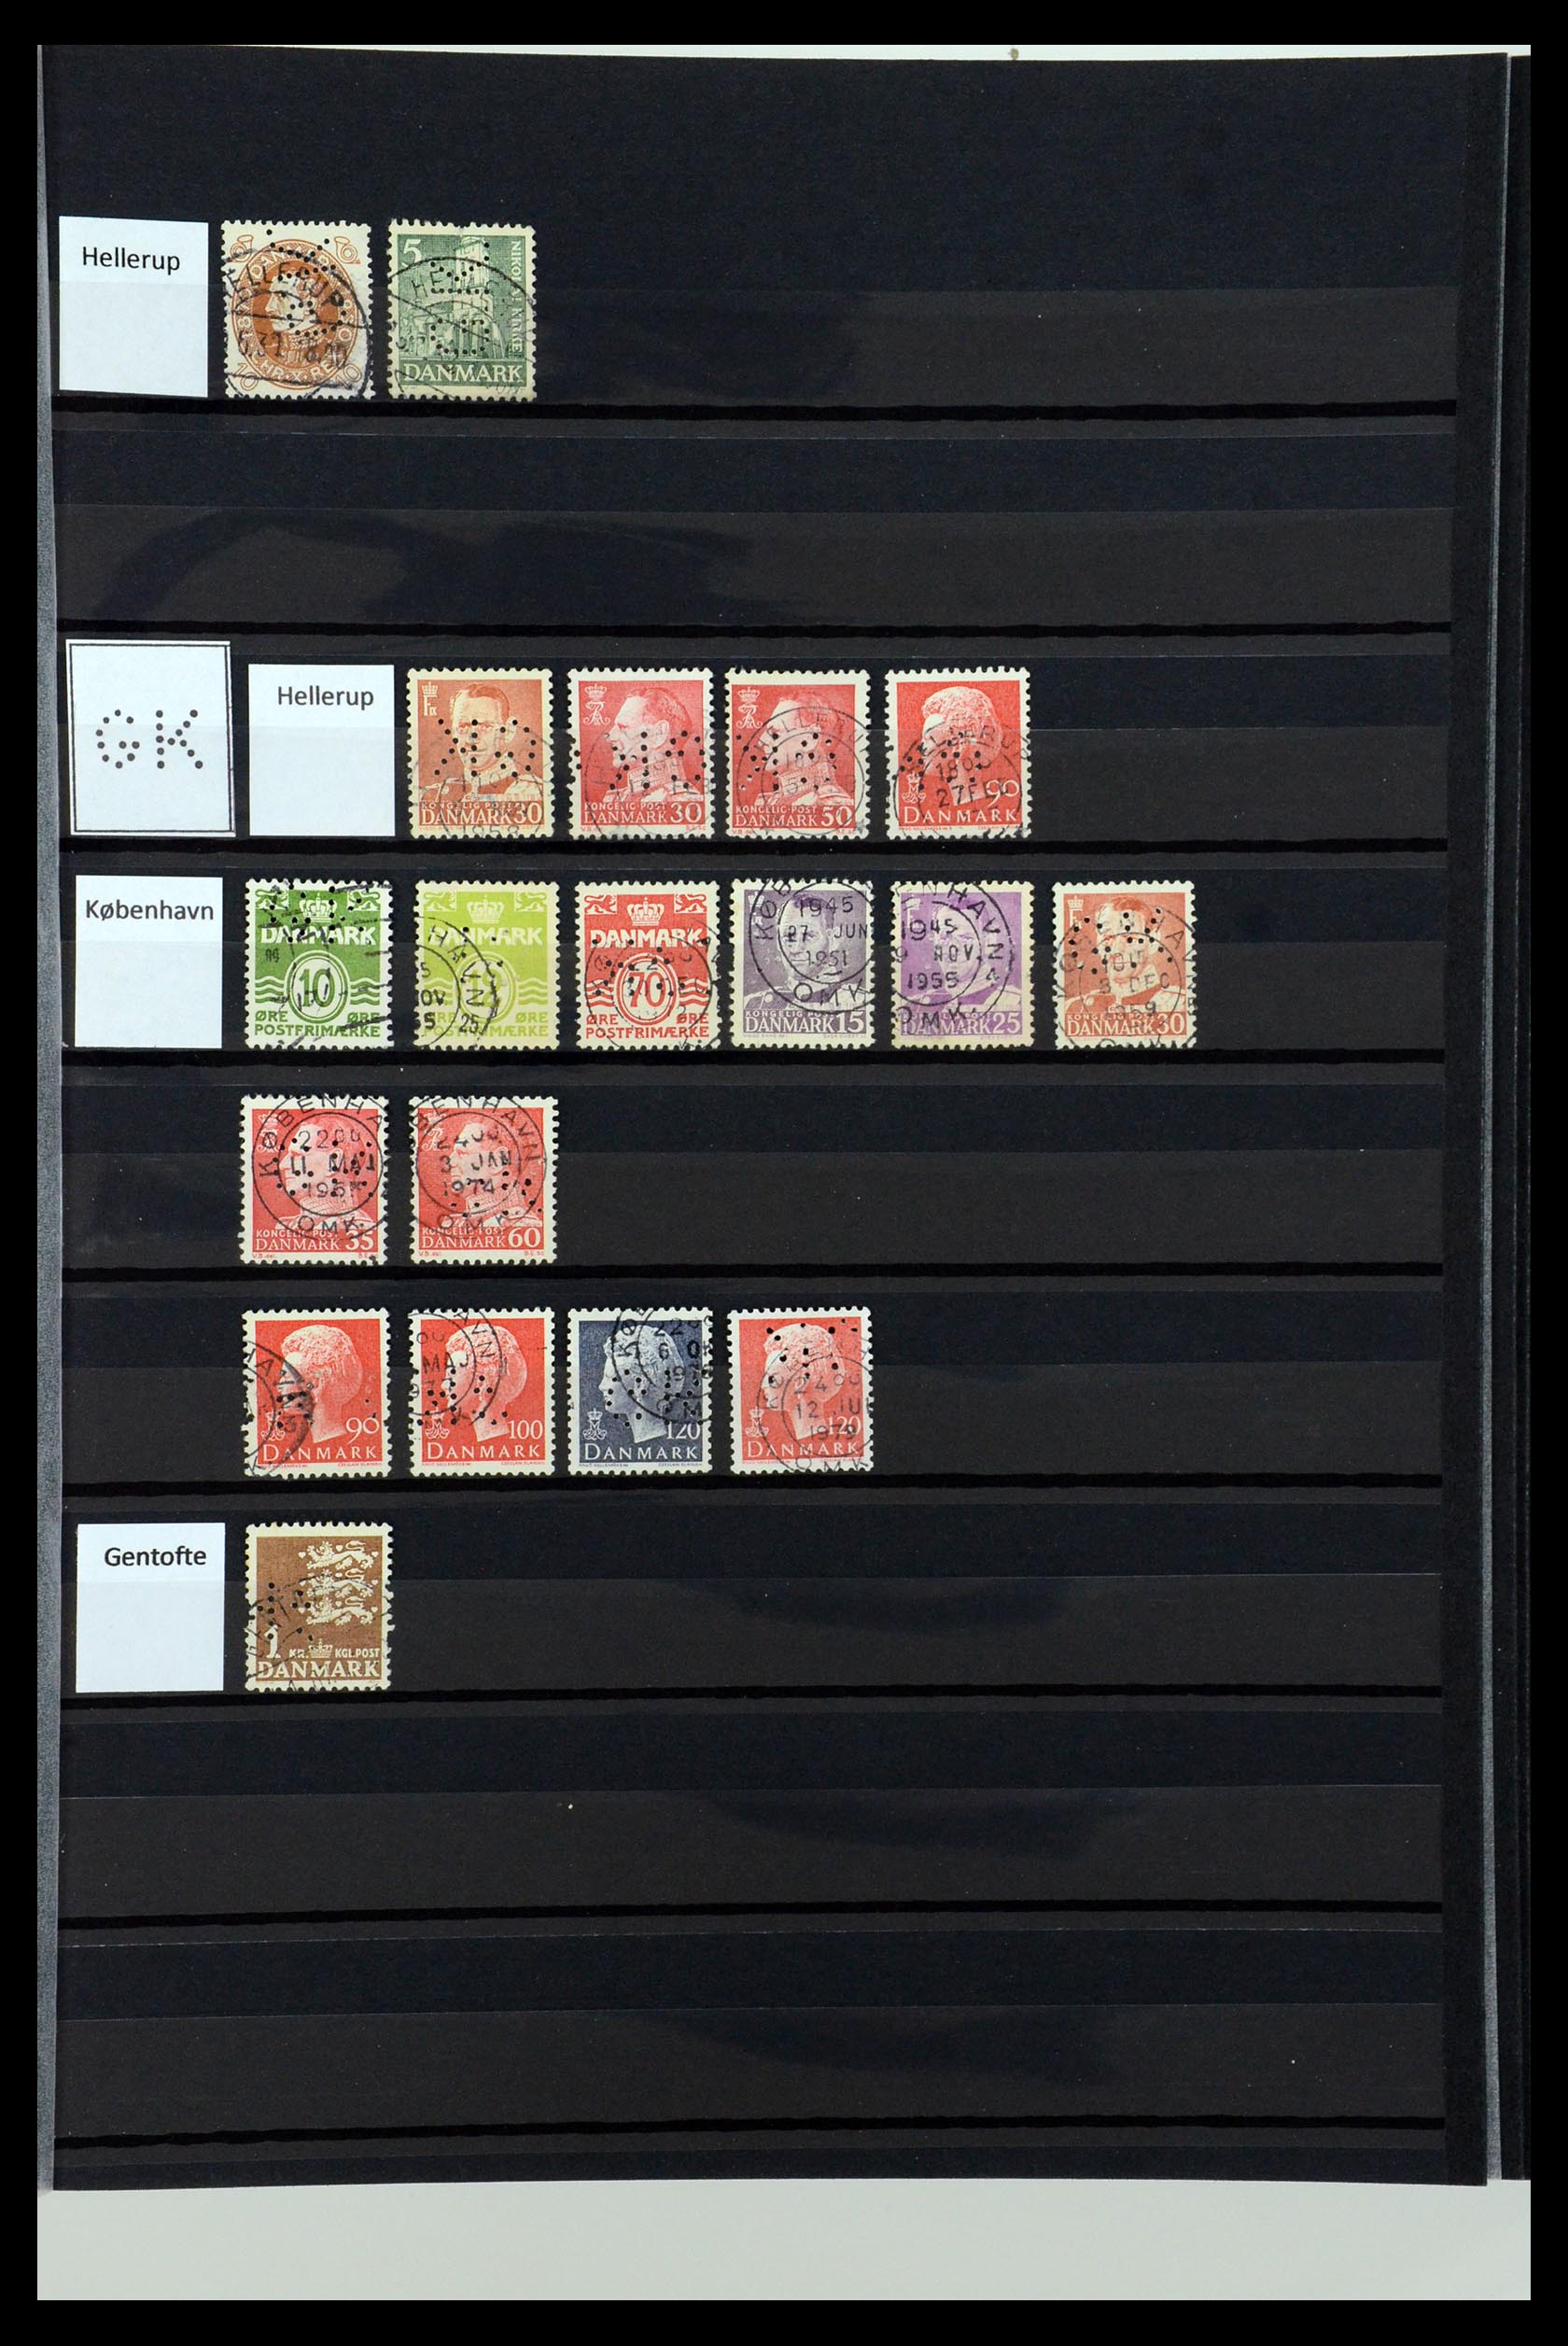 36396 079 - Stamp collection 36396 Denmark perfins.